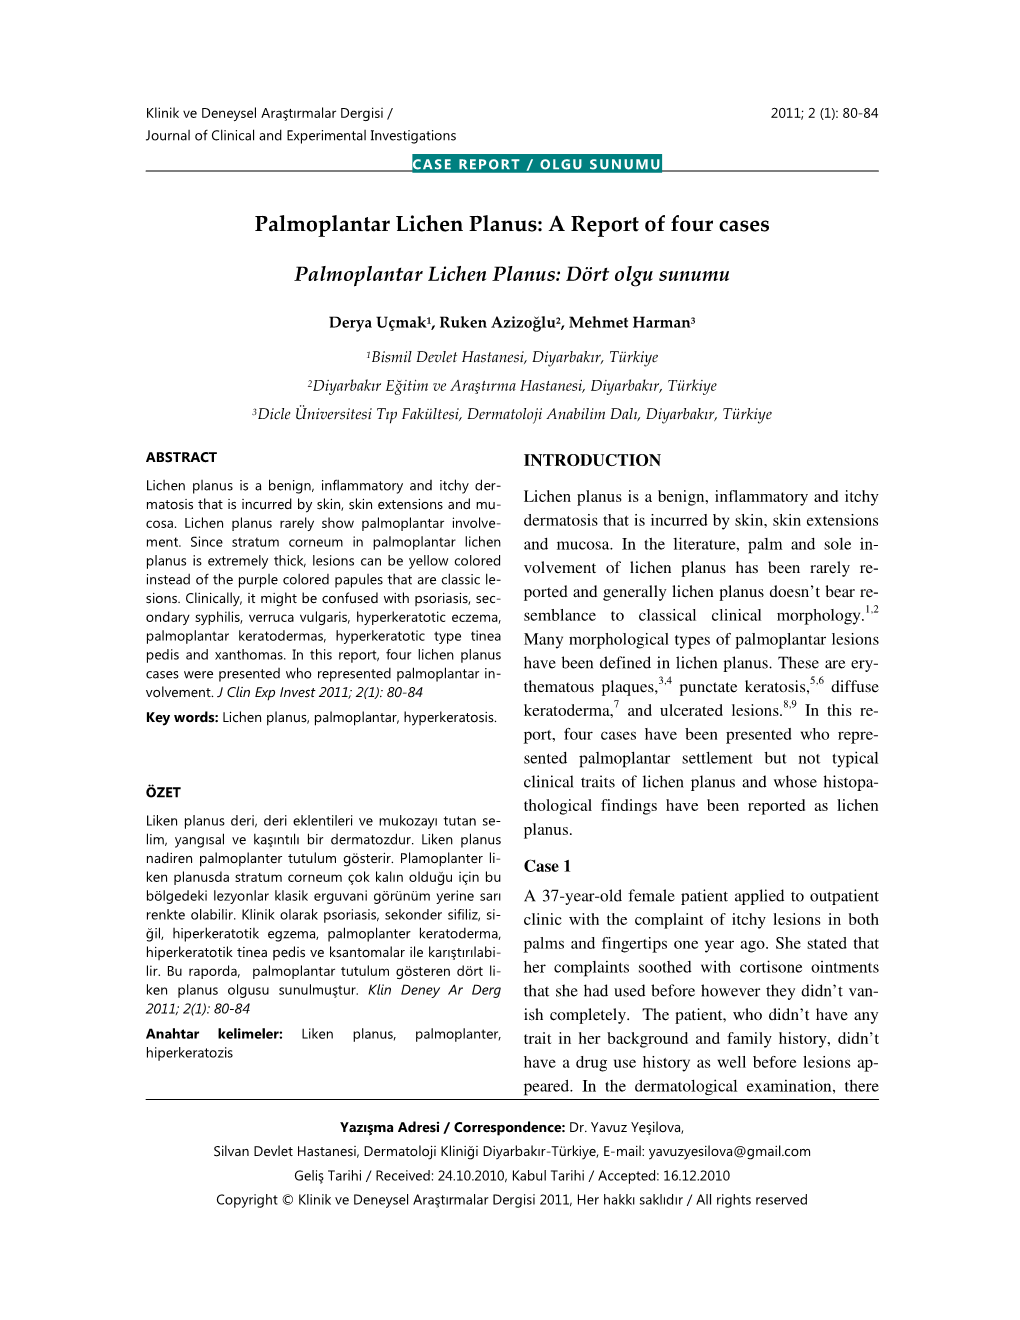 Palmoplantar Lichen Planus: a Report of Four Cases